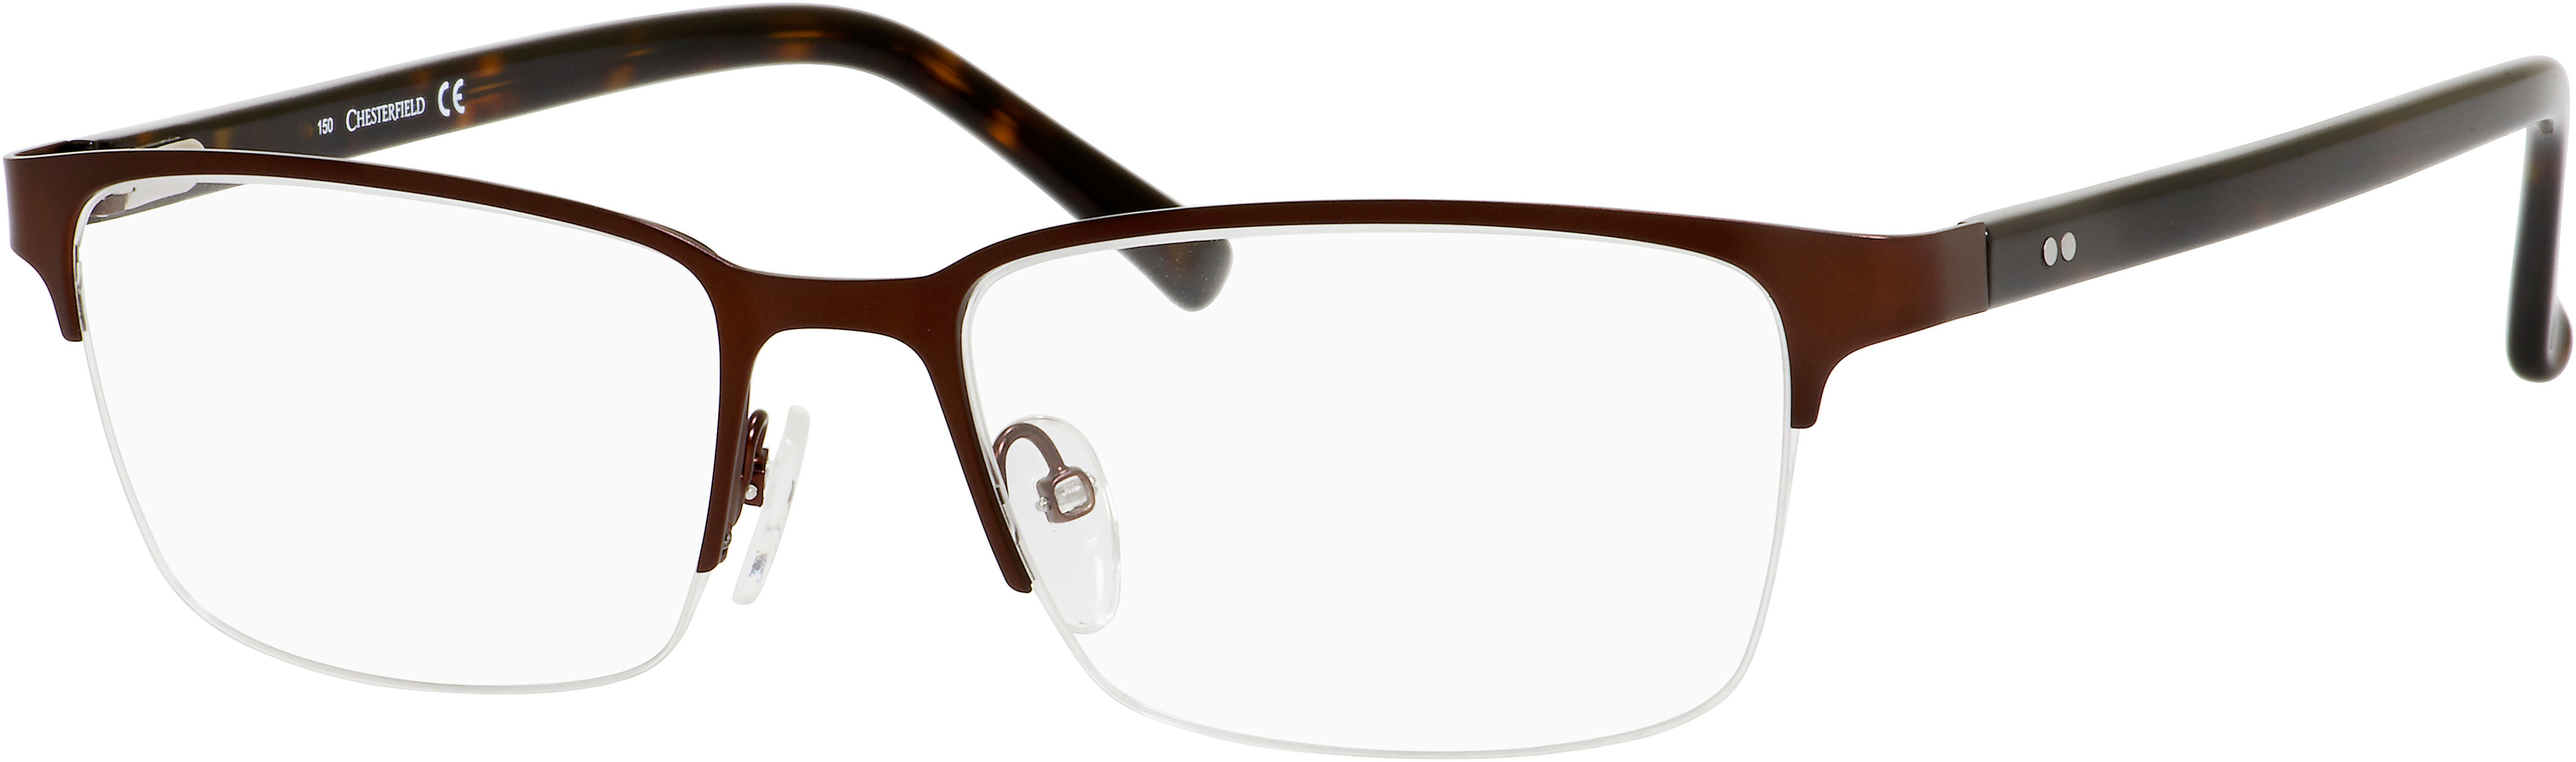  Chesterfield 29 XL Rectangular Eyeglasses 01P5-01P5  Brown (00 Demo Lens)